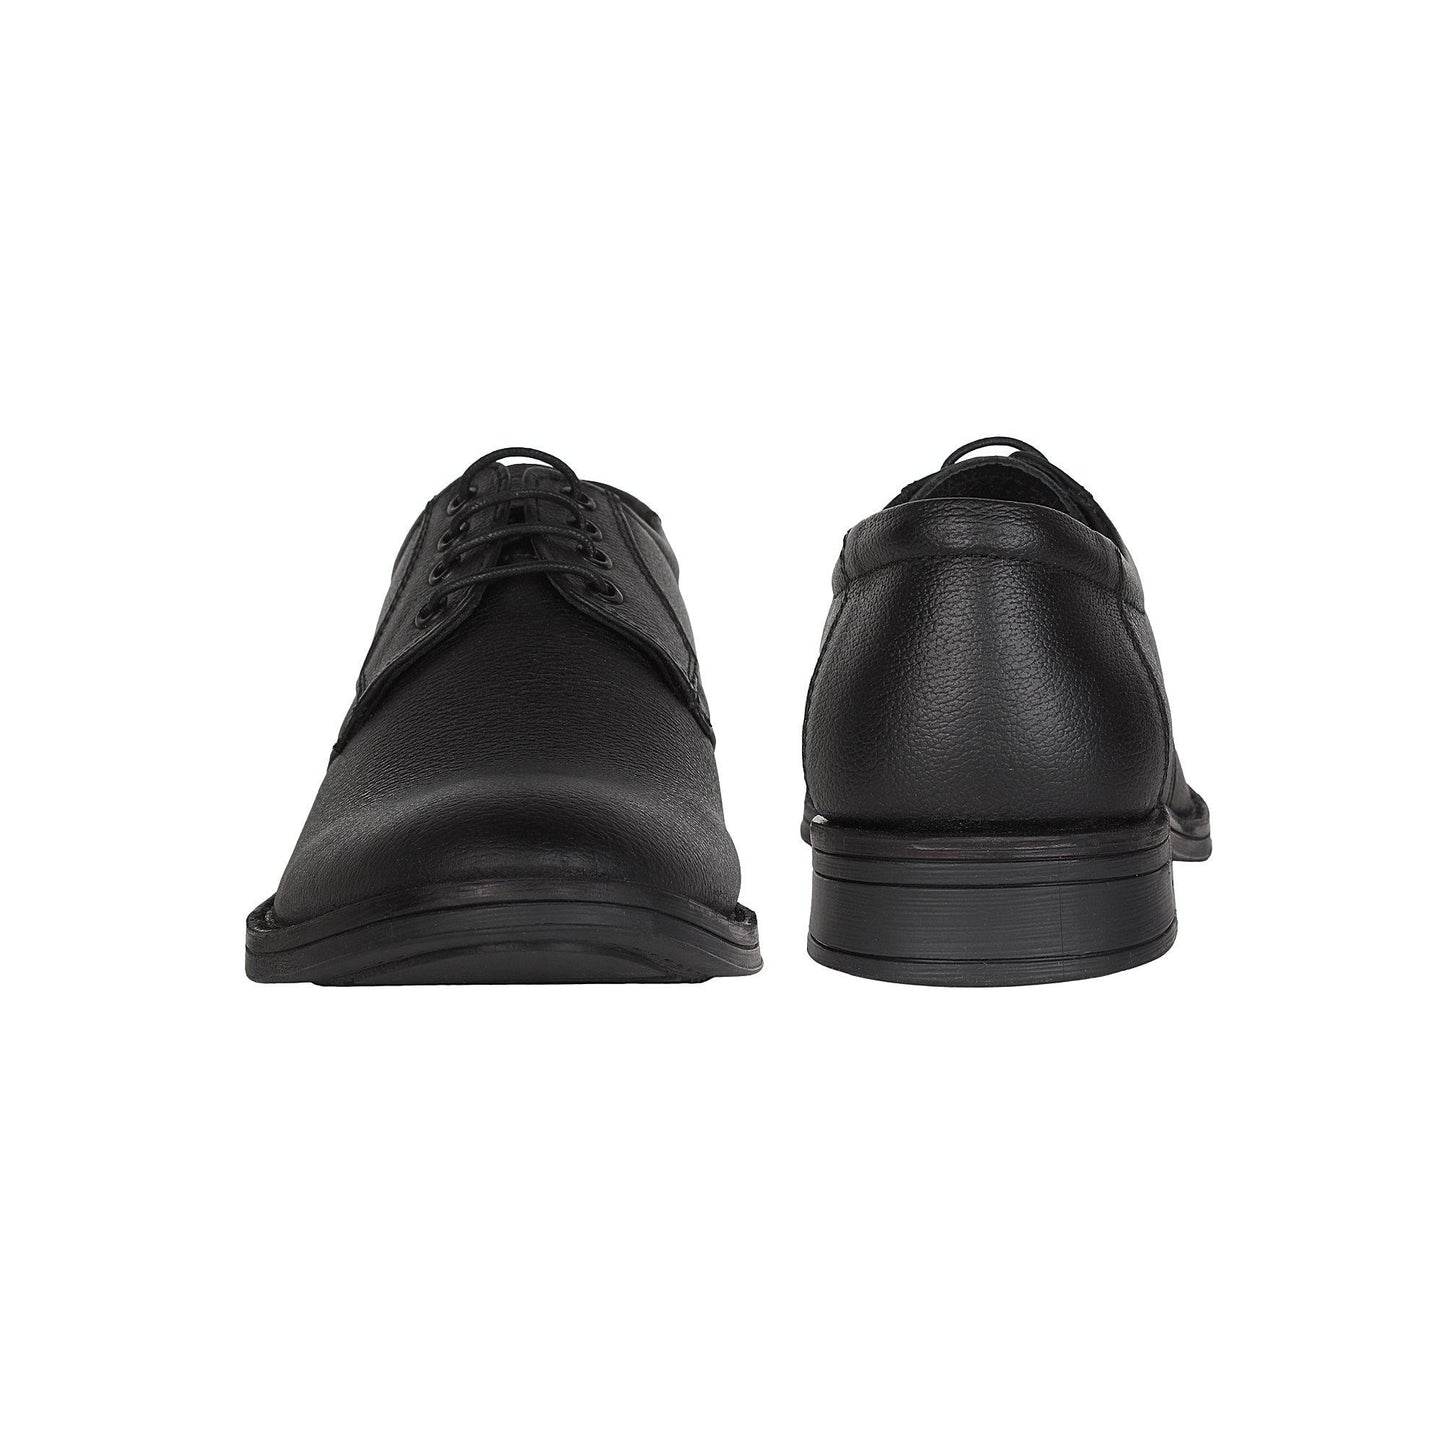 SeeandWear Genuine Leather Black Formal Shoes For Men - SeeandWear